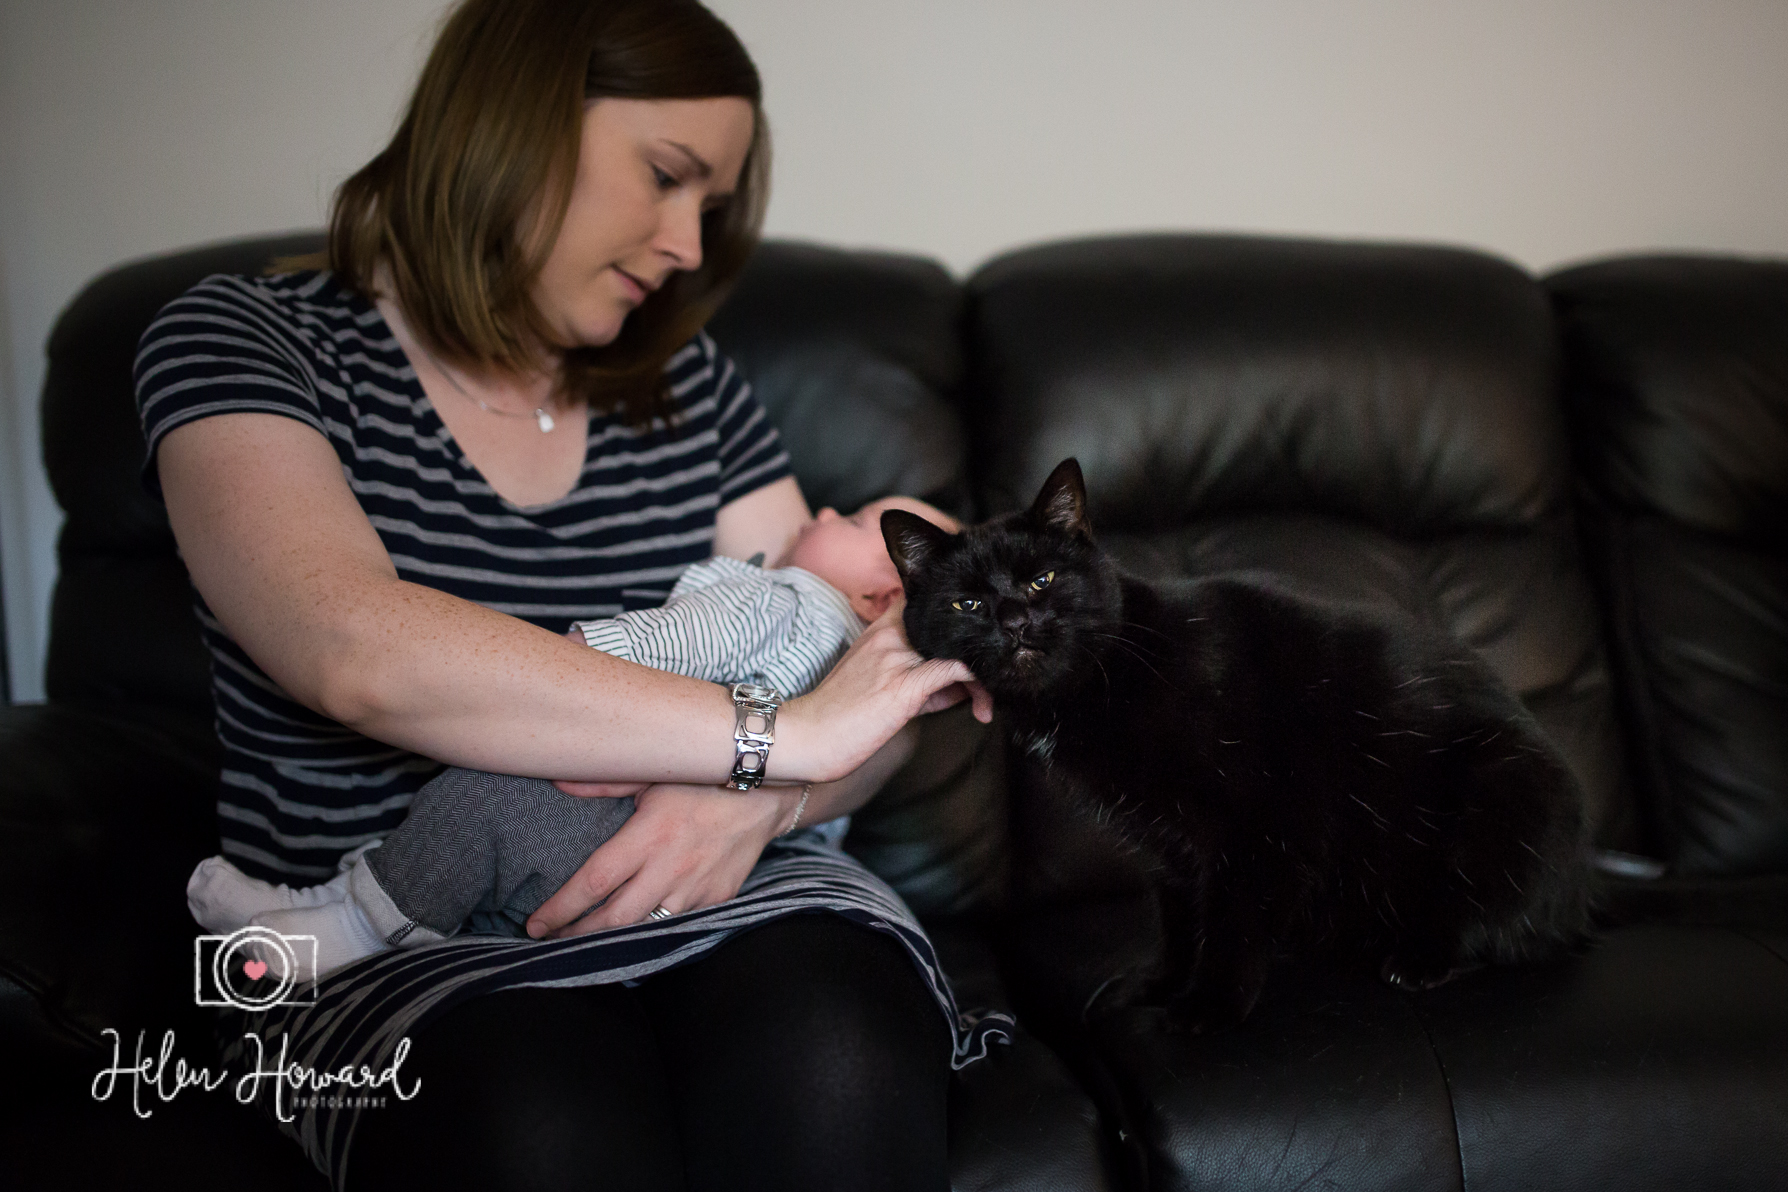 Family Newborn Photography by Helen Howard-13.jpg